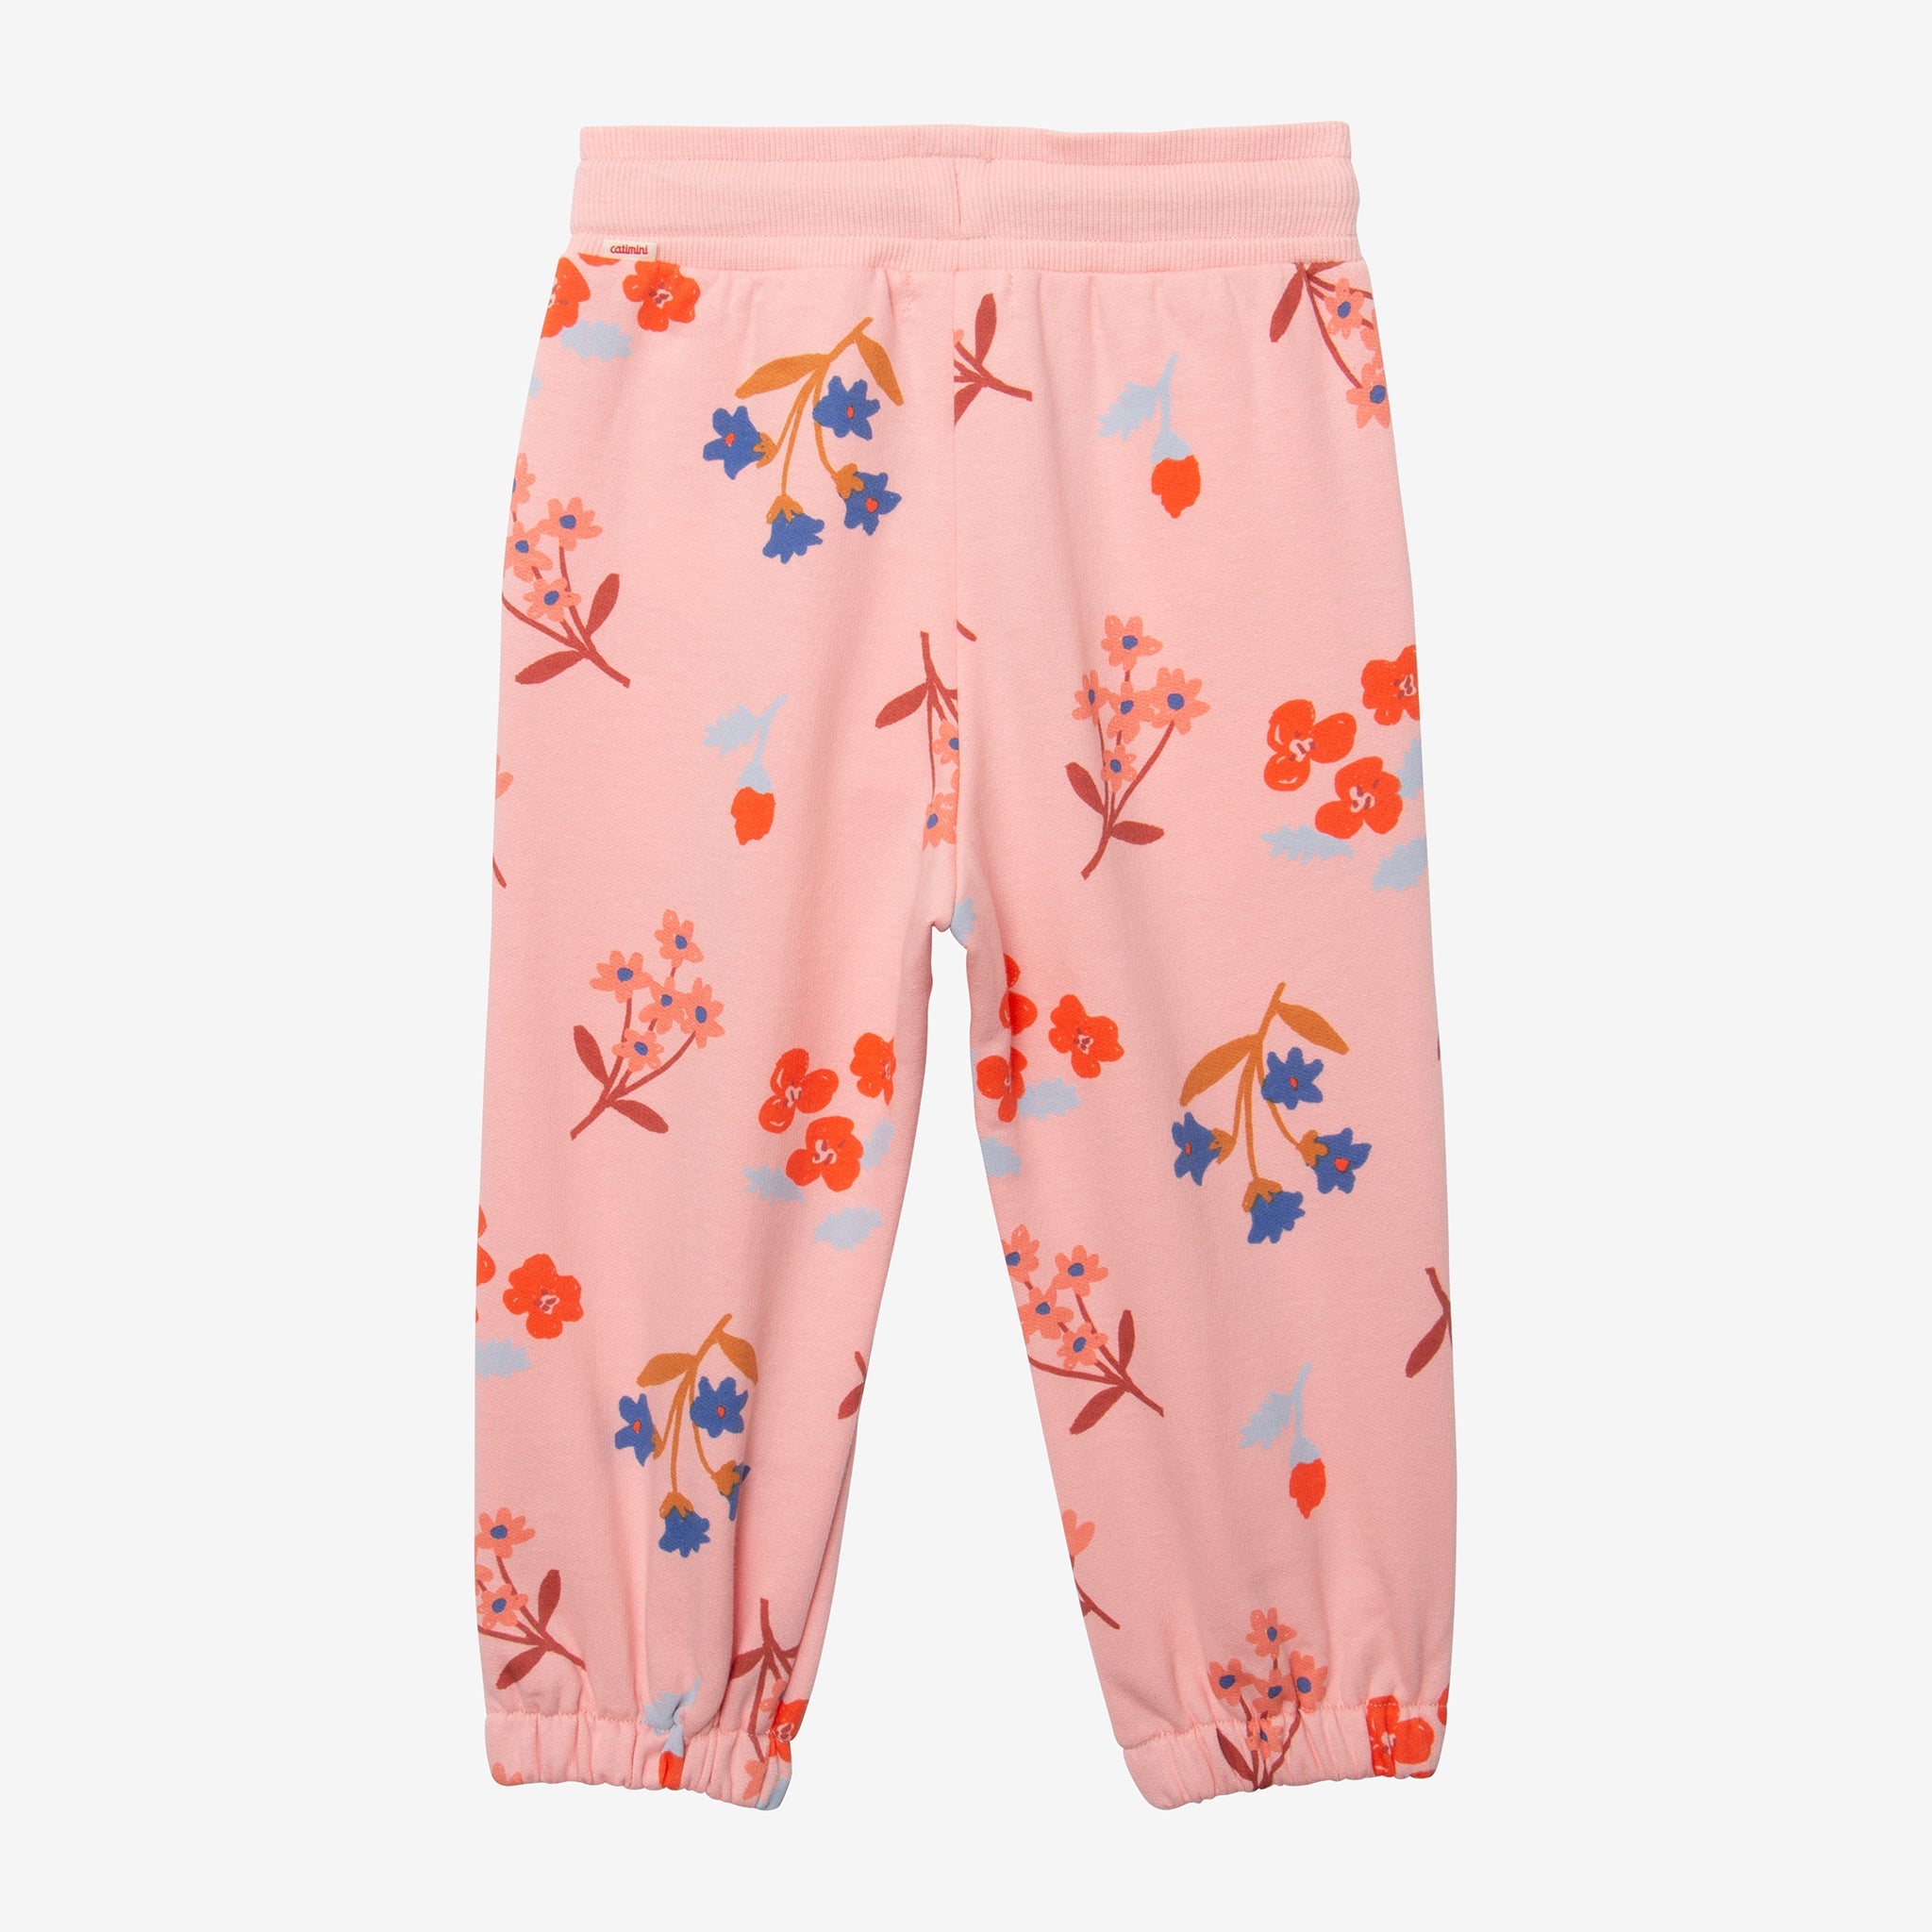 Kids Fleece Pants | Hot Pink, Toddler Joggers | Jan & Jul